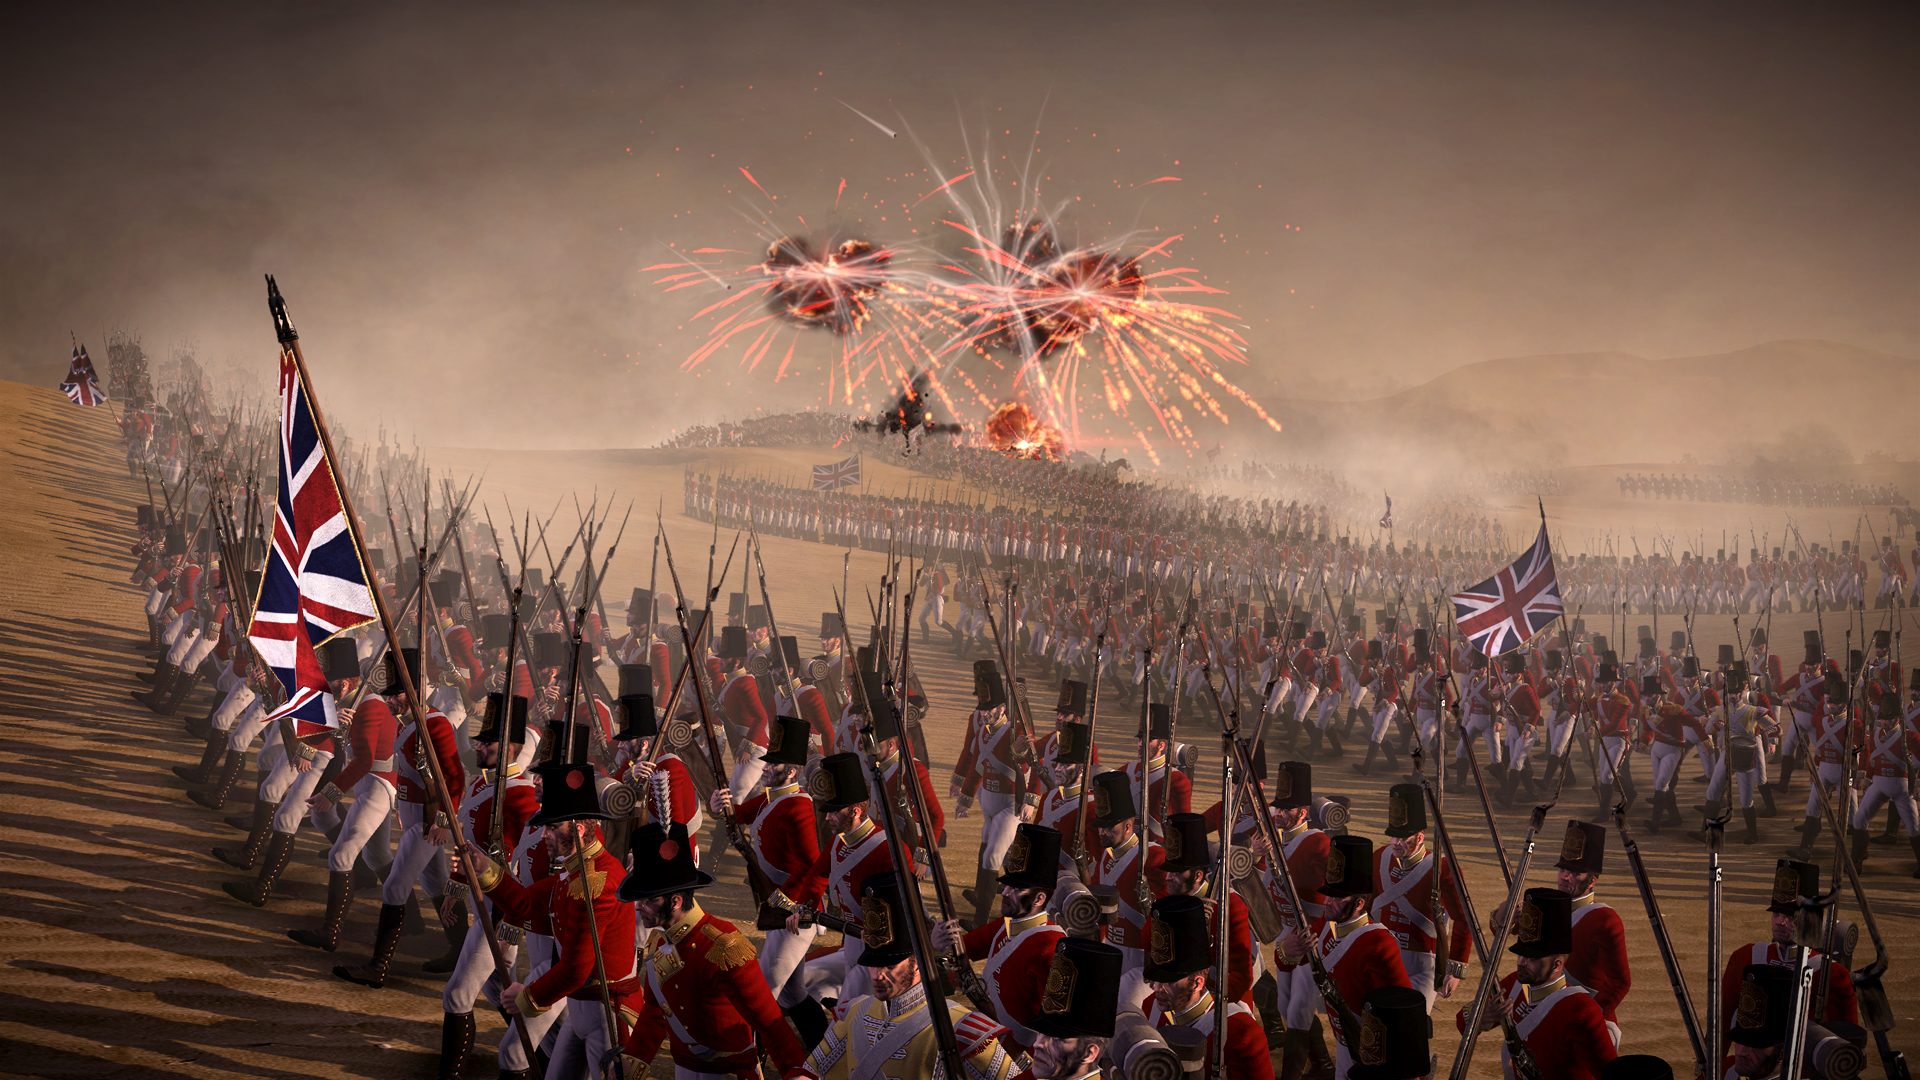 Napoleon Total War Wallpaper - Bing images